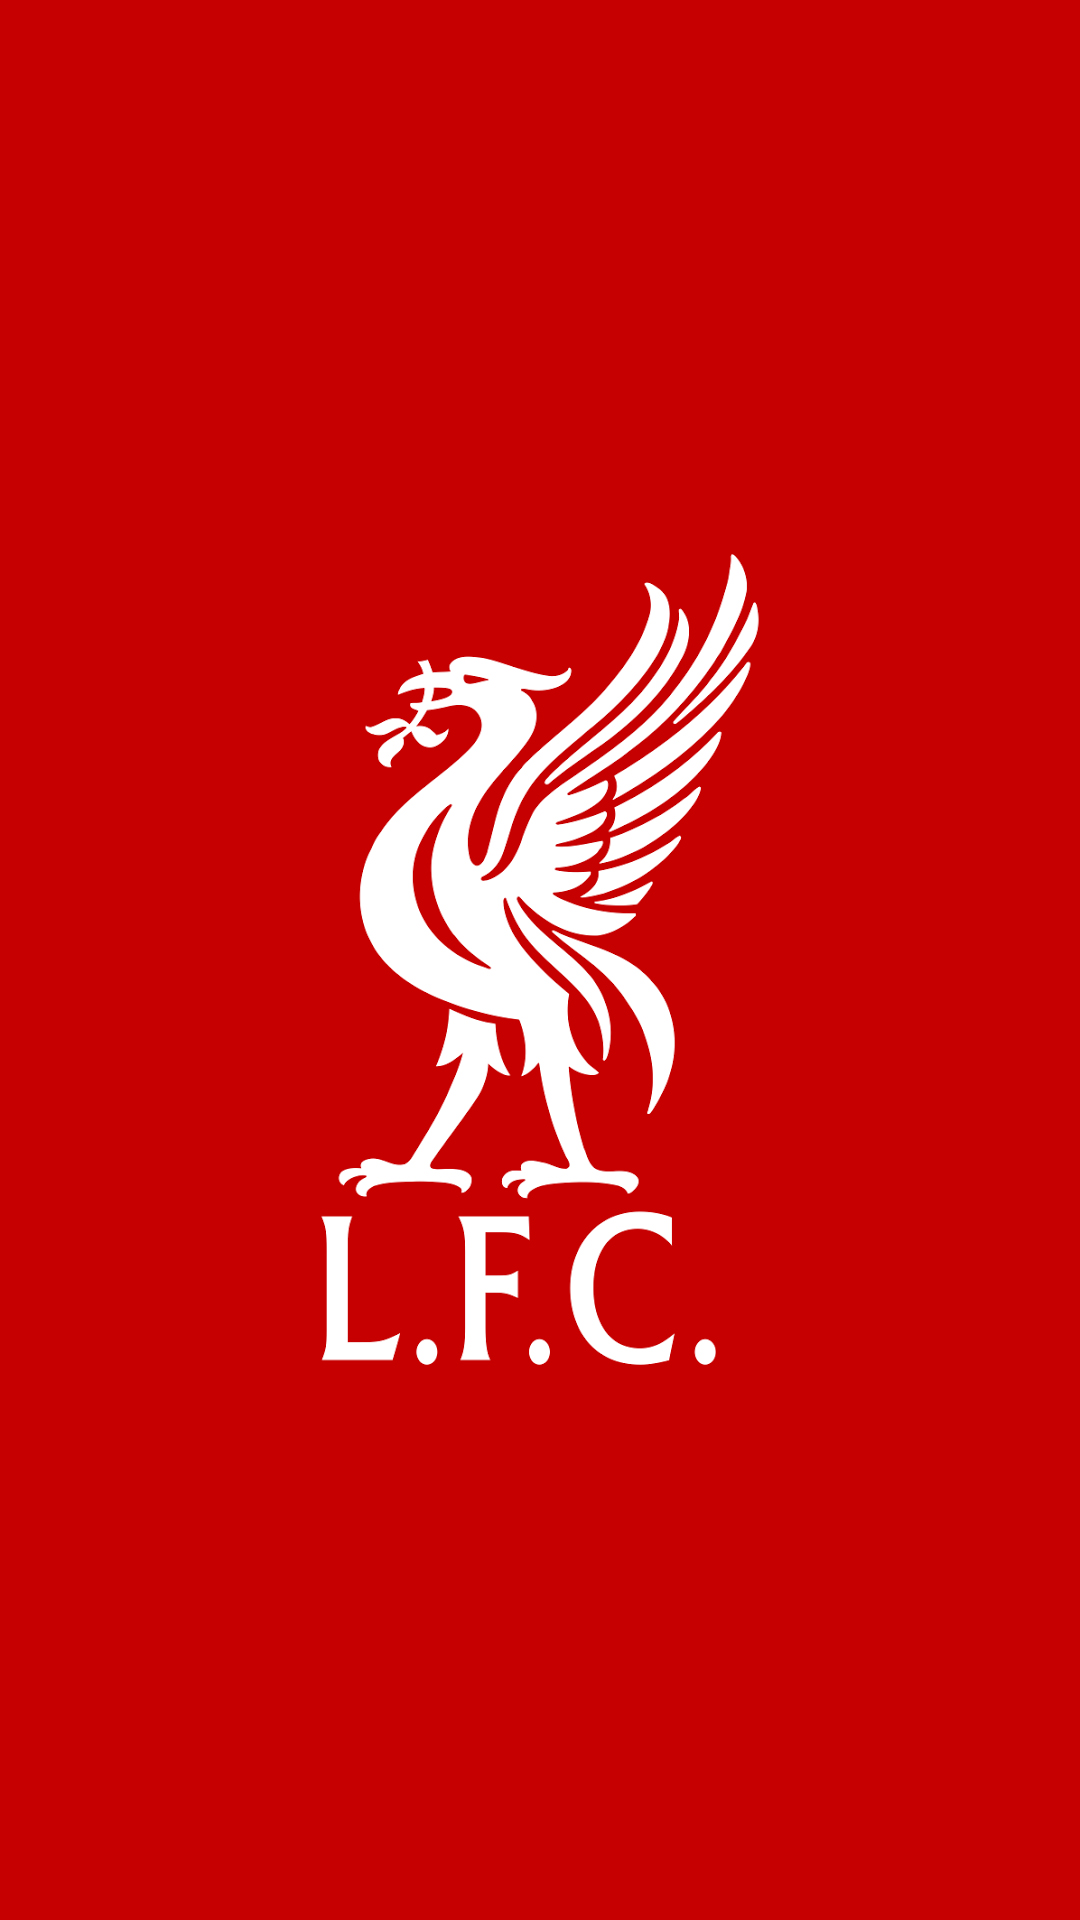 Liverpool crest wallpaper